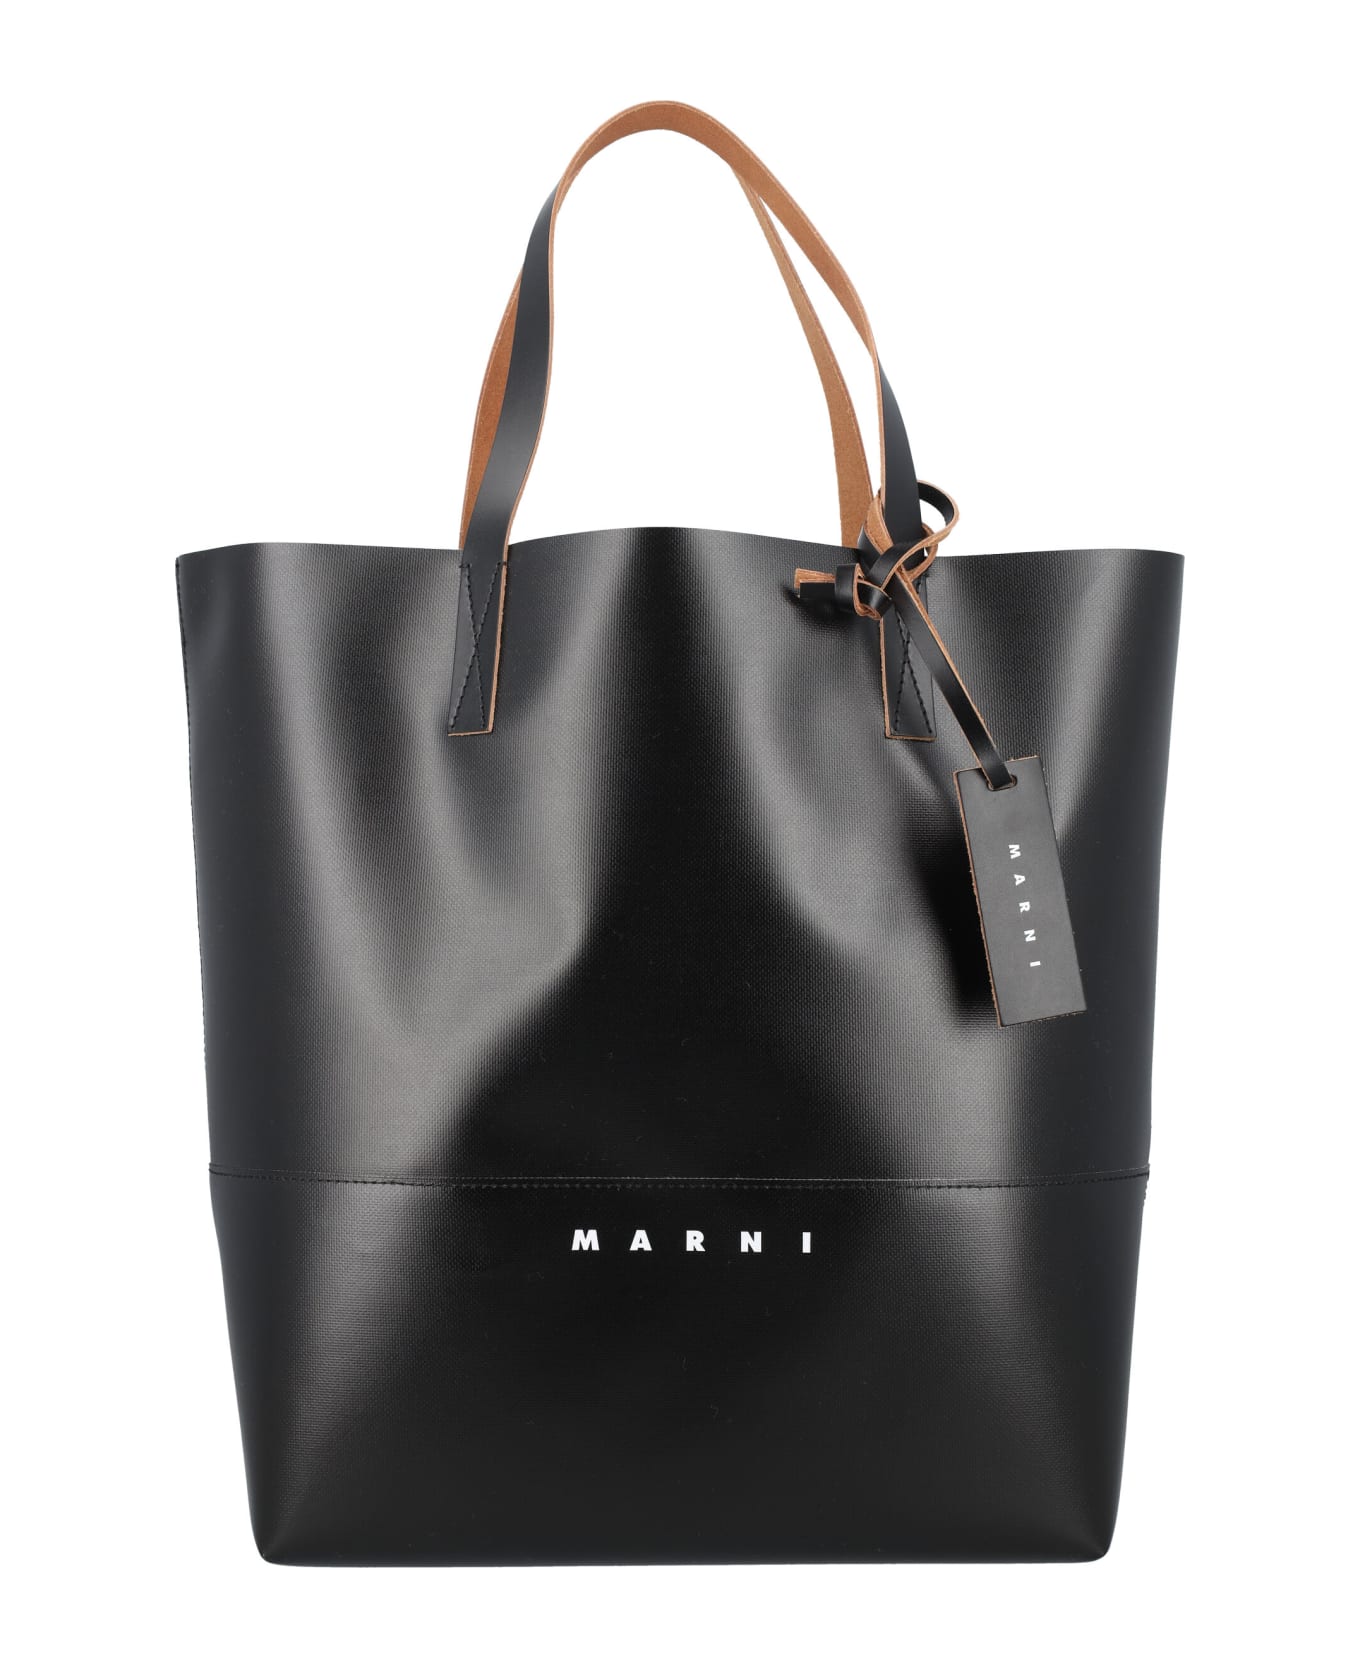 Marni Tribeca Shopping Bag - BLACK